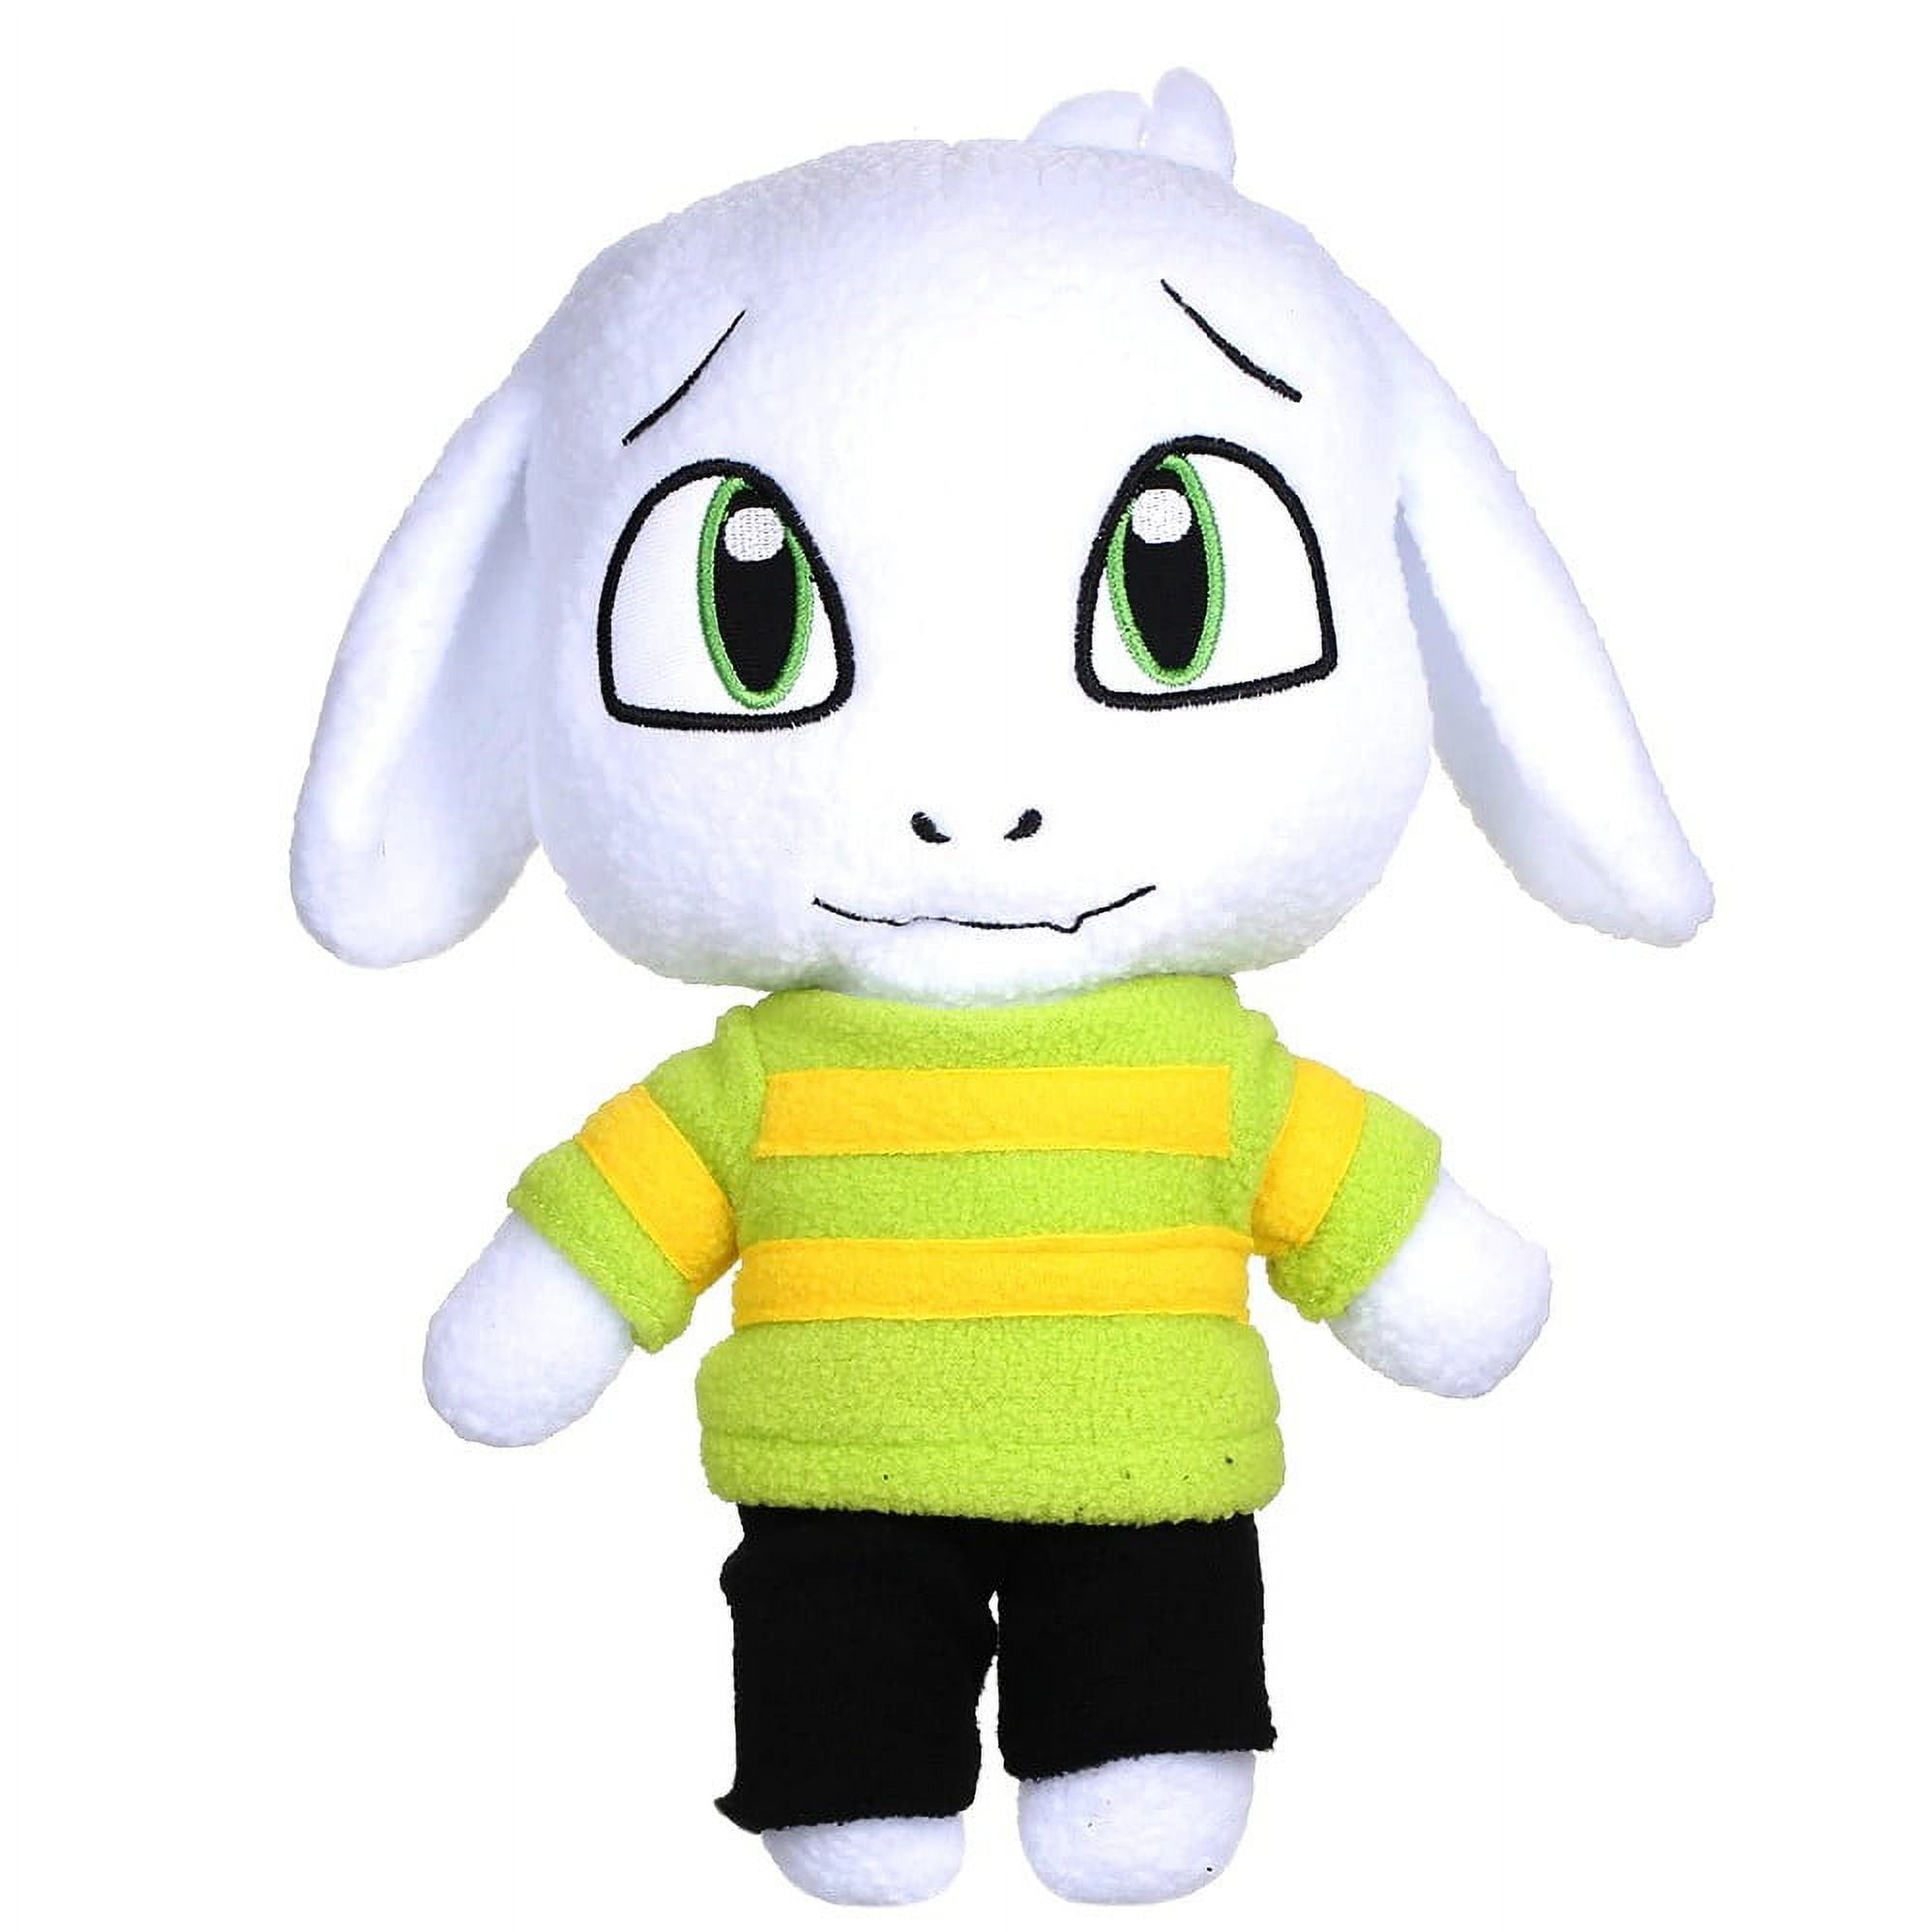 Sans - Undertale Plush Stuffed Animal Kids Toy Plushie 